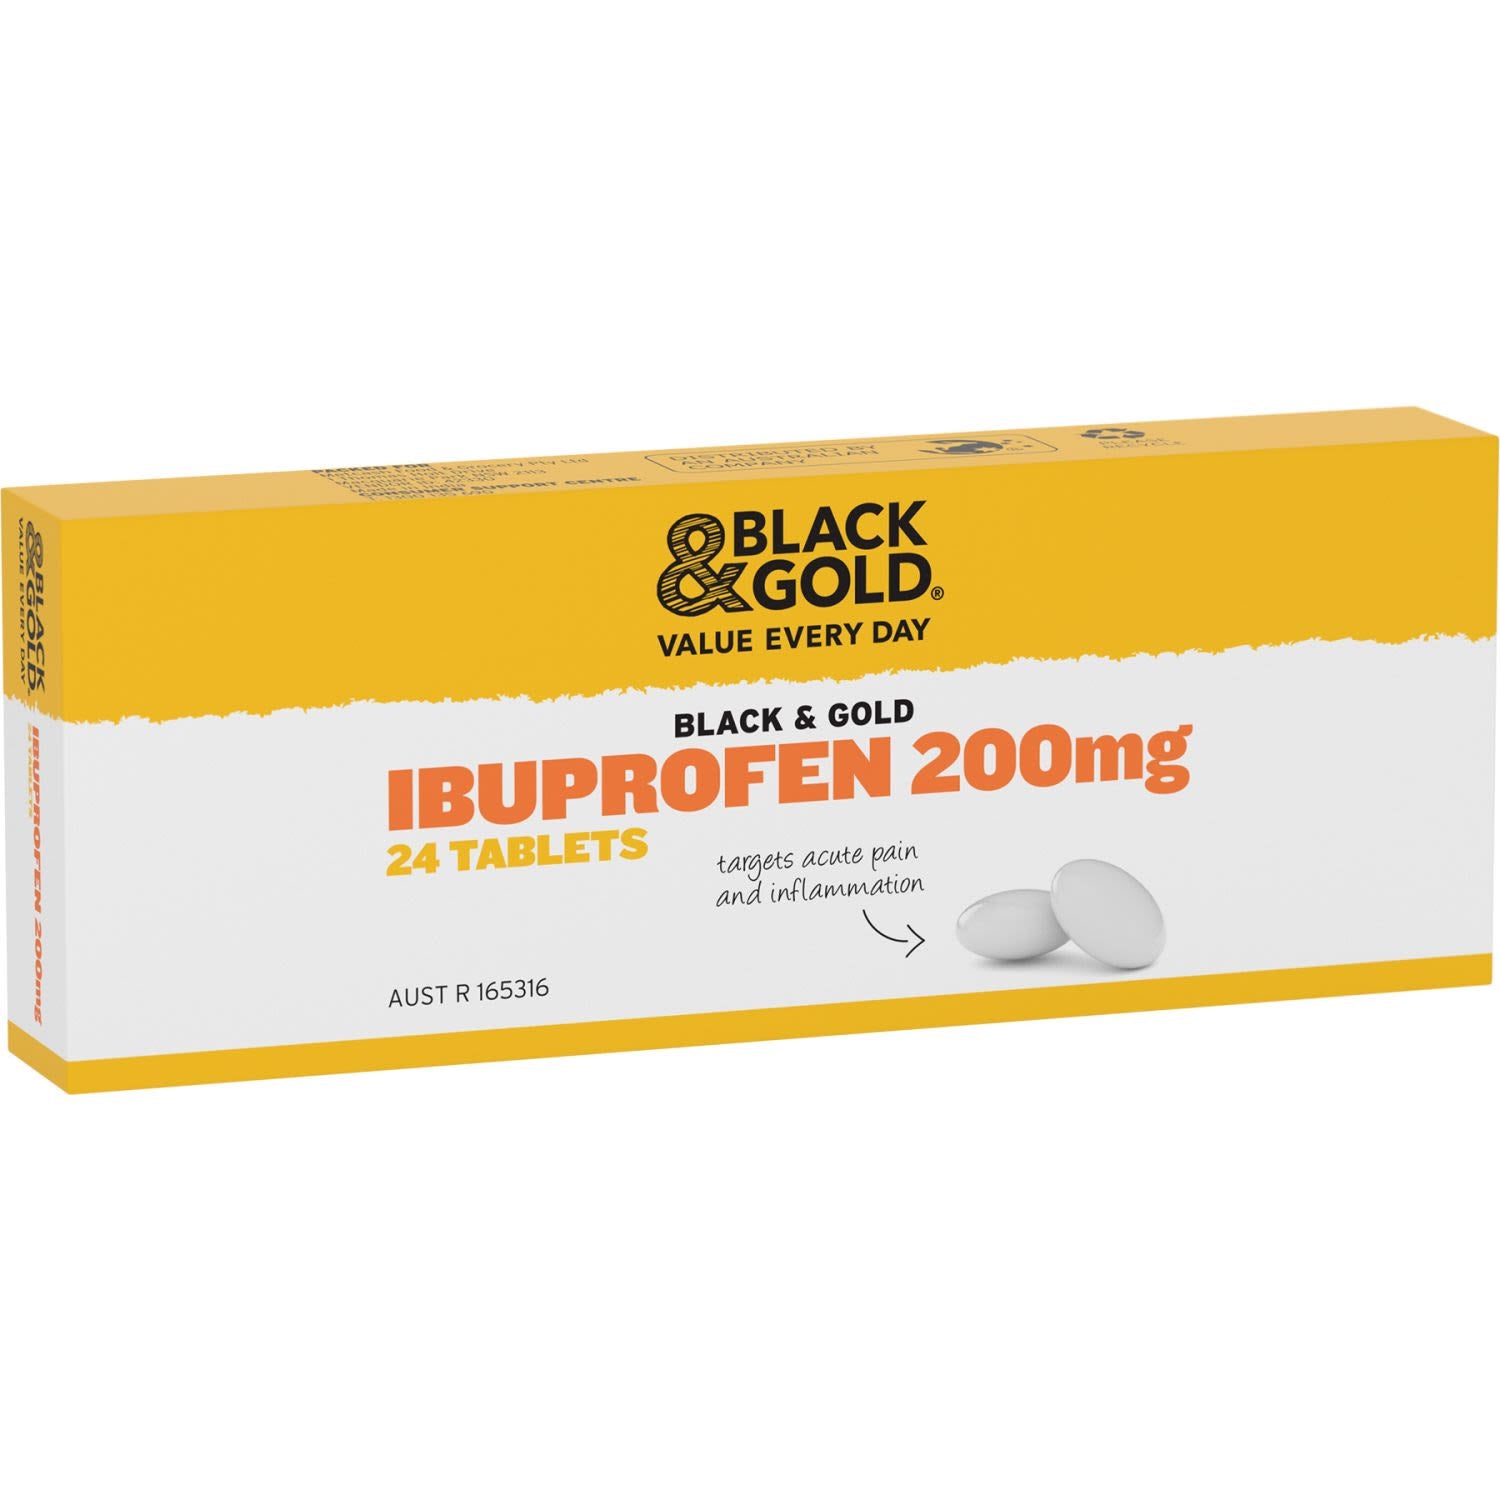 Black & Gold Ibuprofen 200mg Tablets 24pk